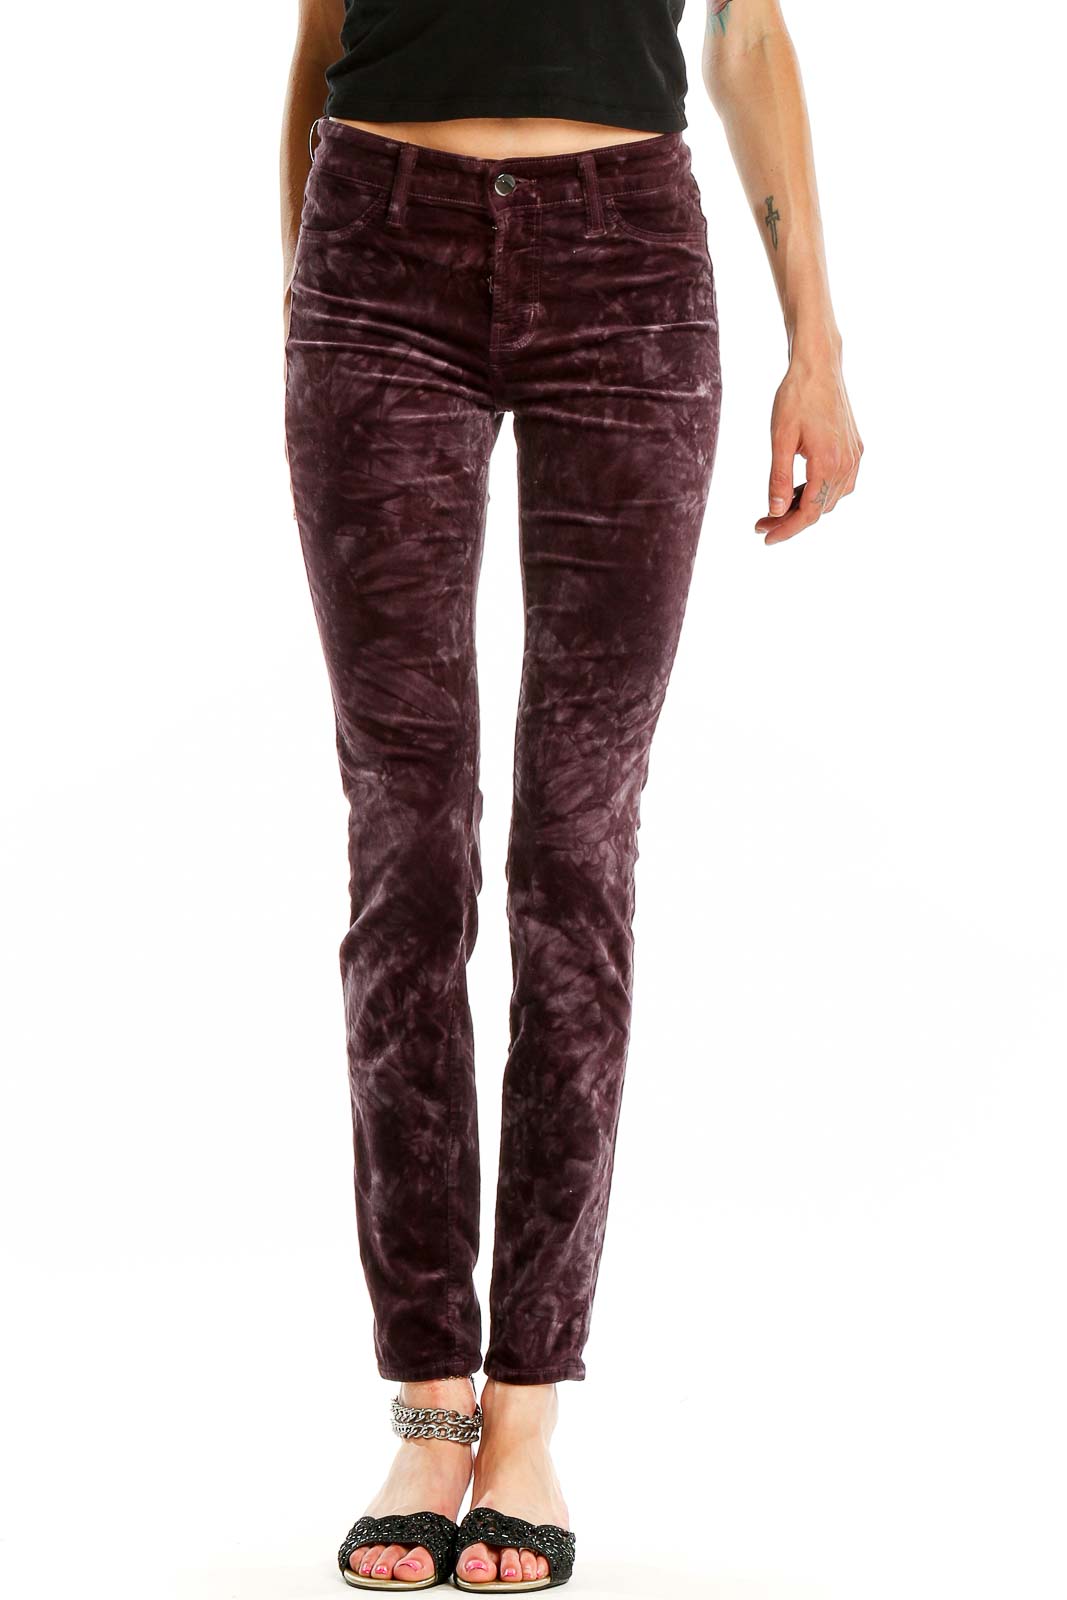 Purple Textured Pants Front